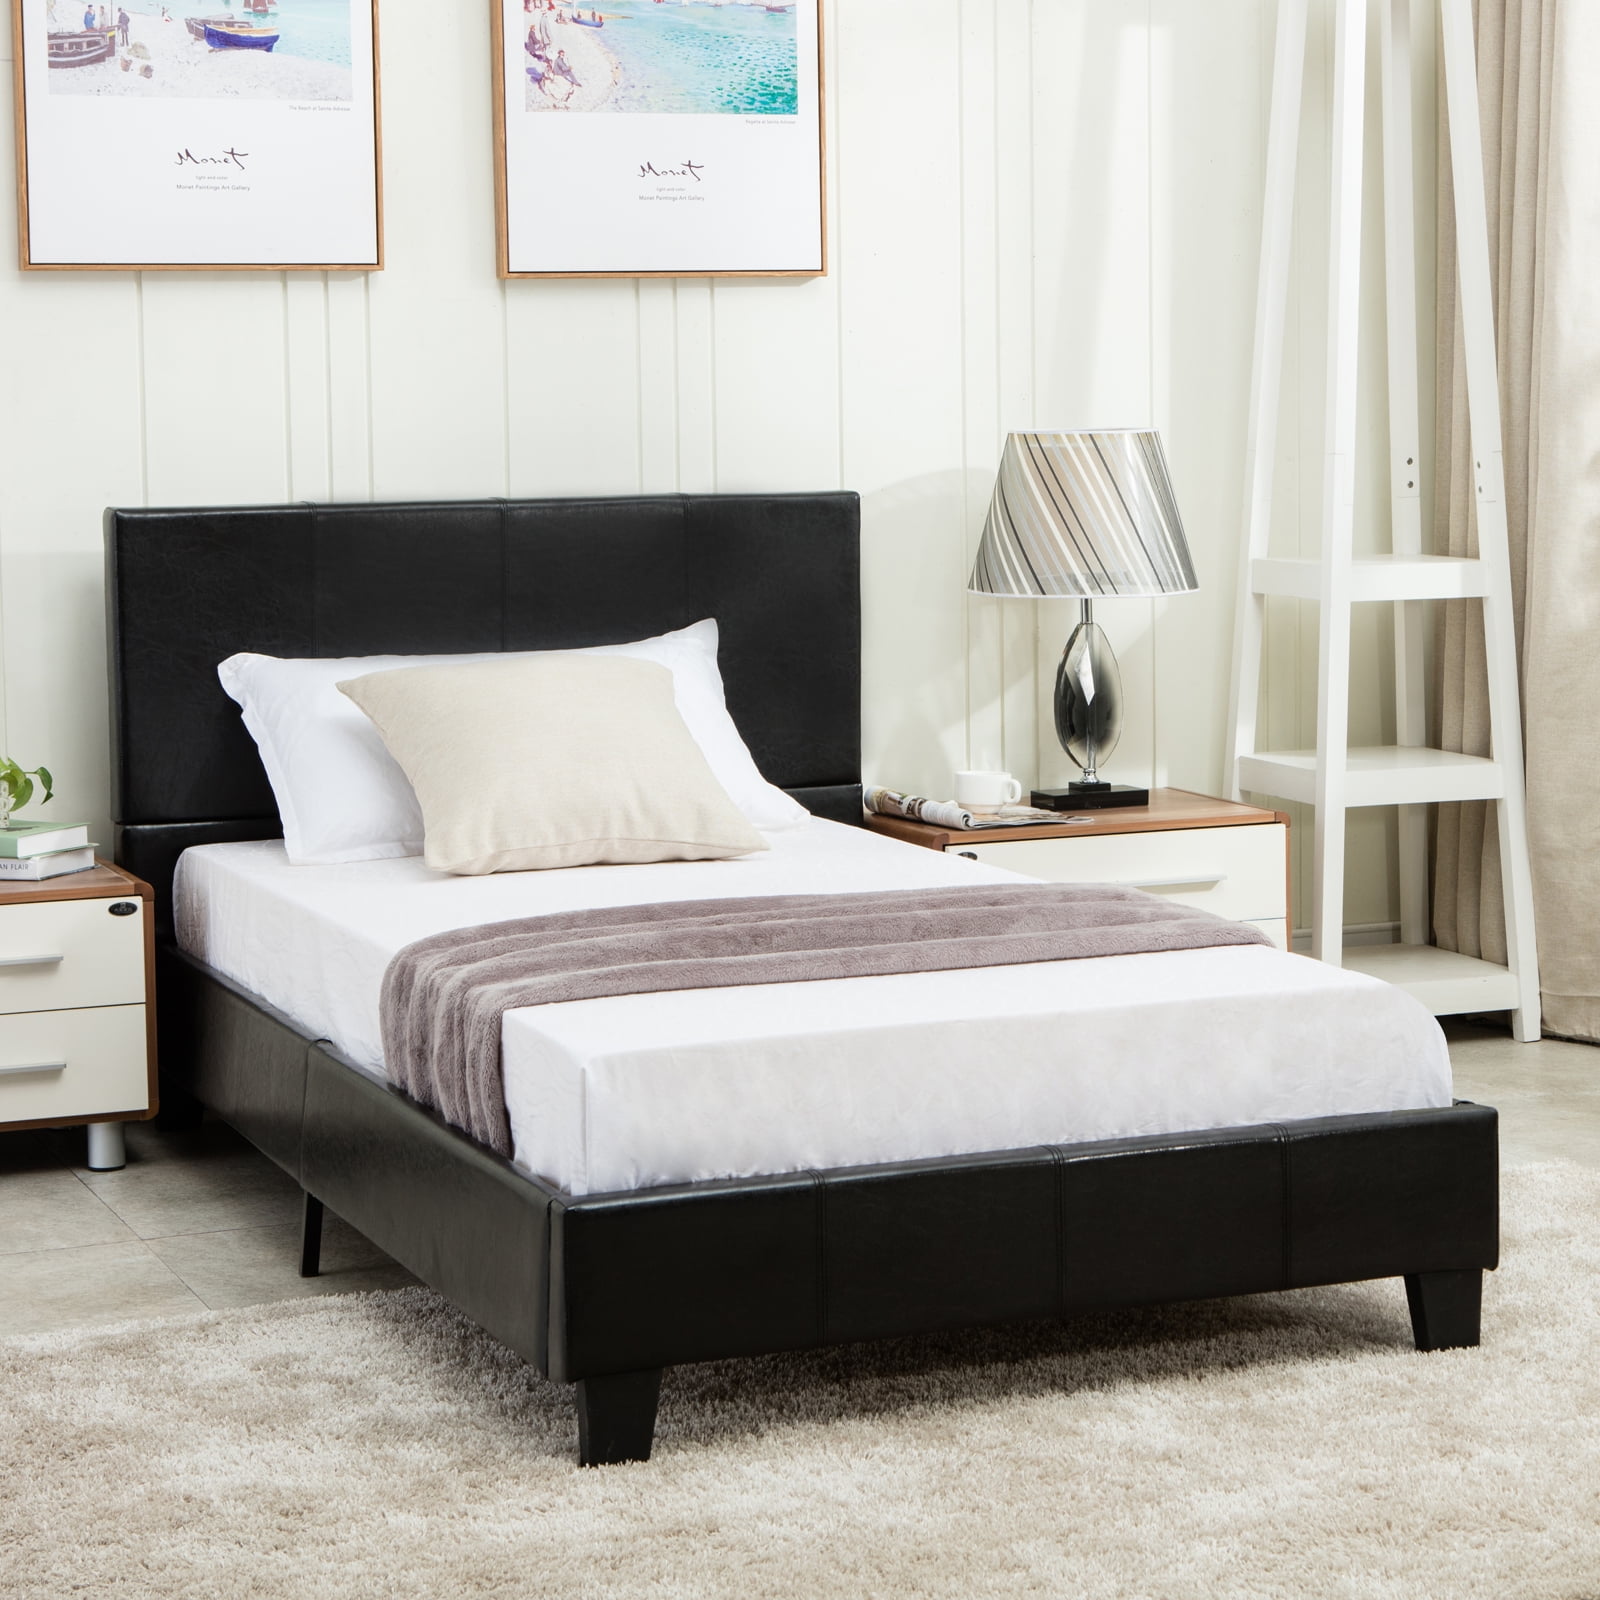 Mecor Bed Upholstered Headboard Bedroom, Leather Headboard Bedroom Sets